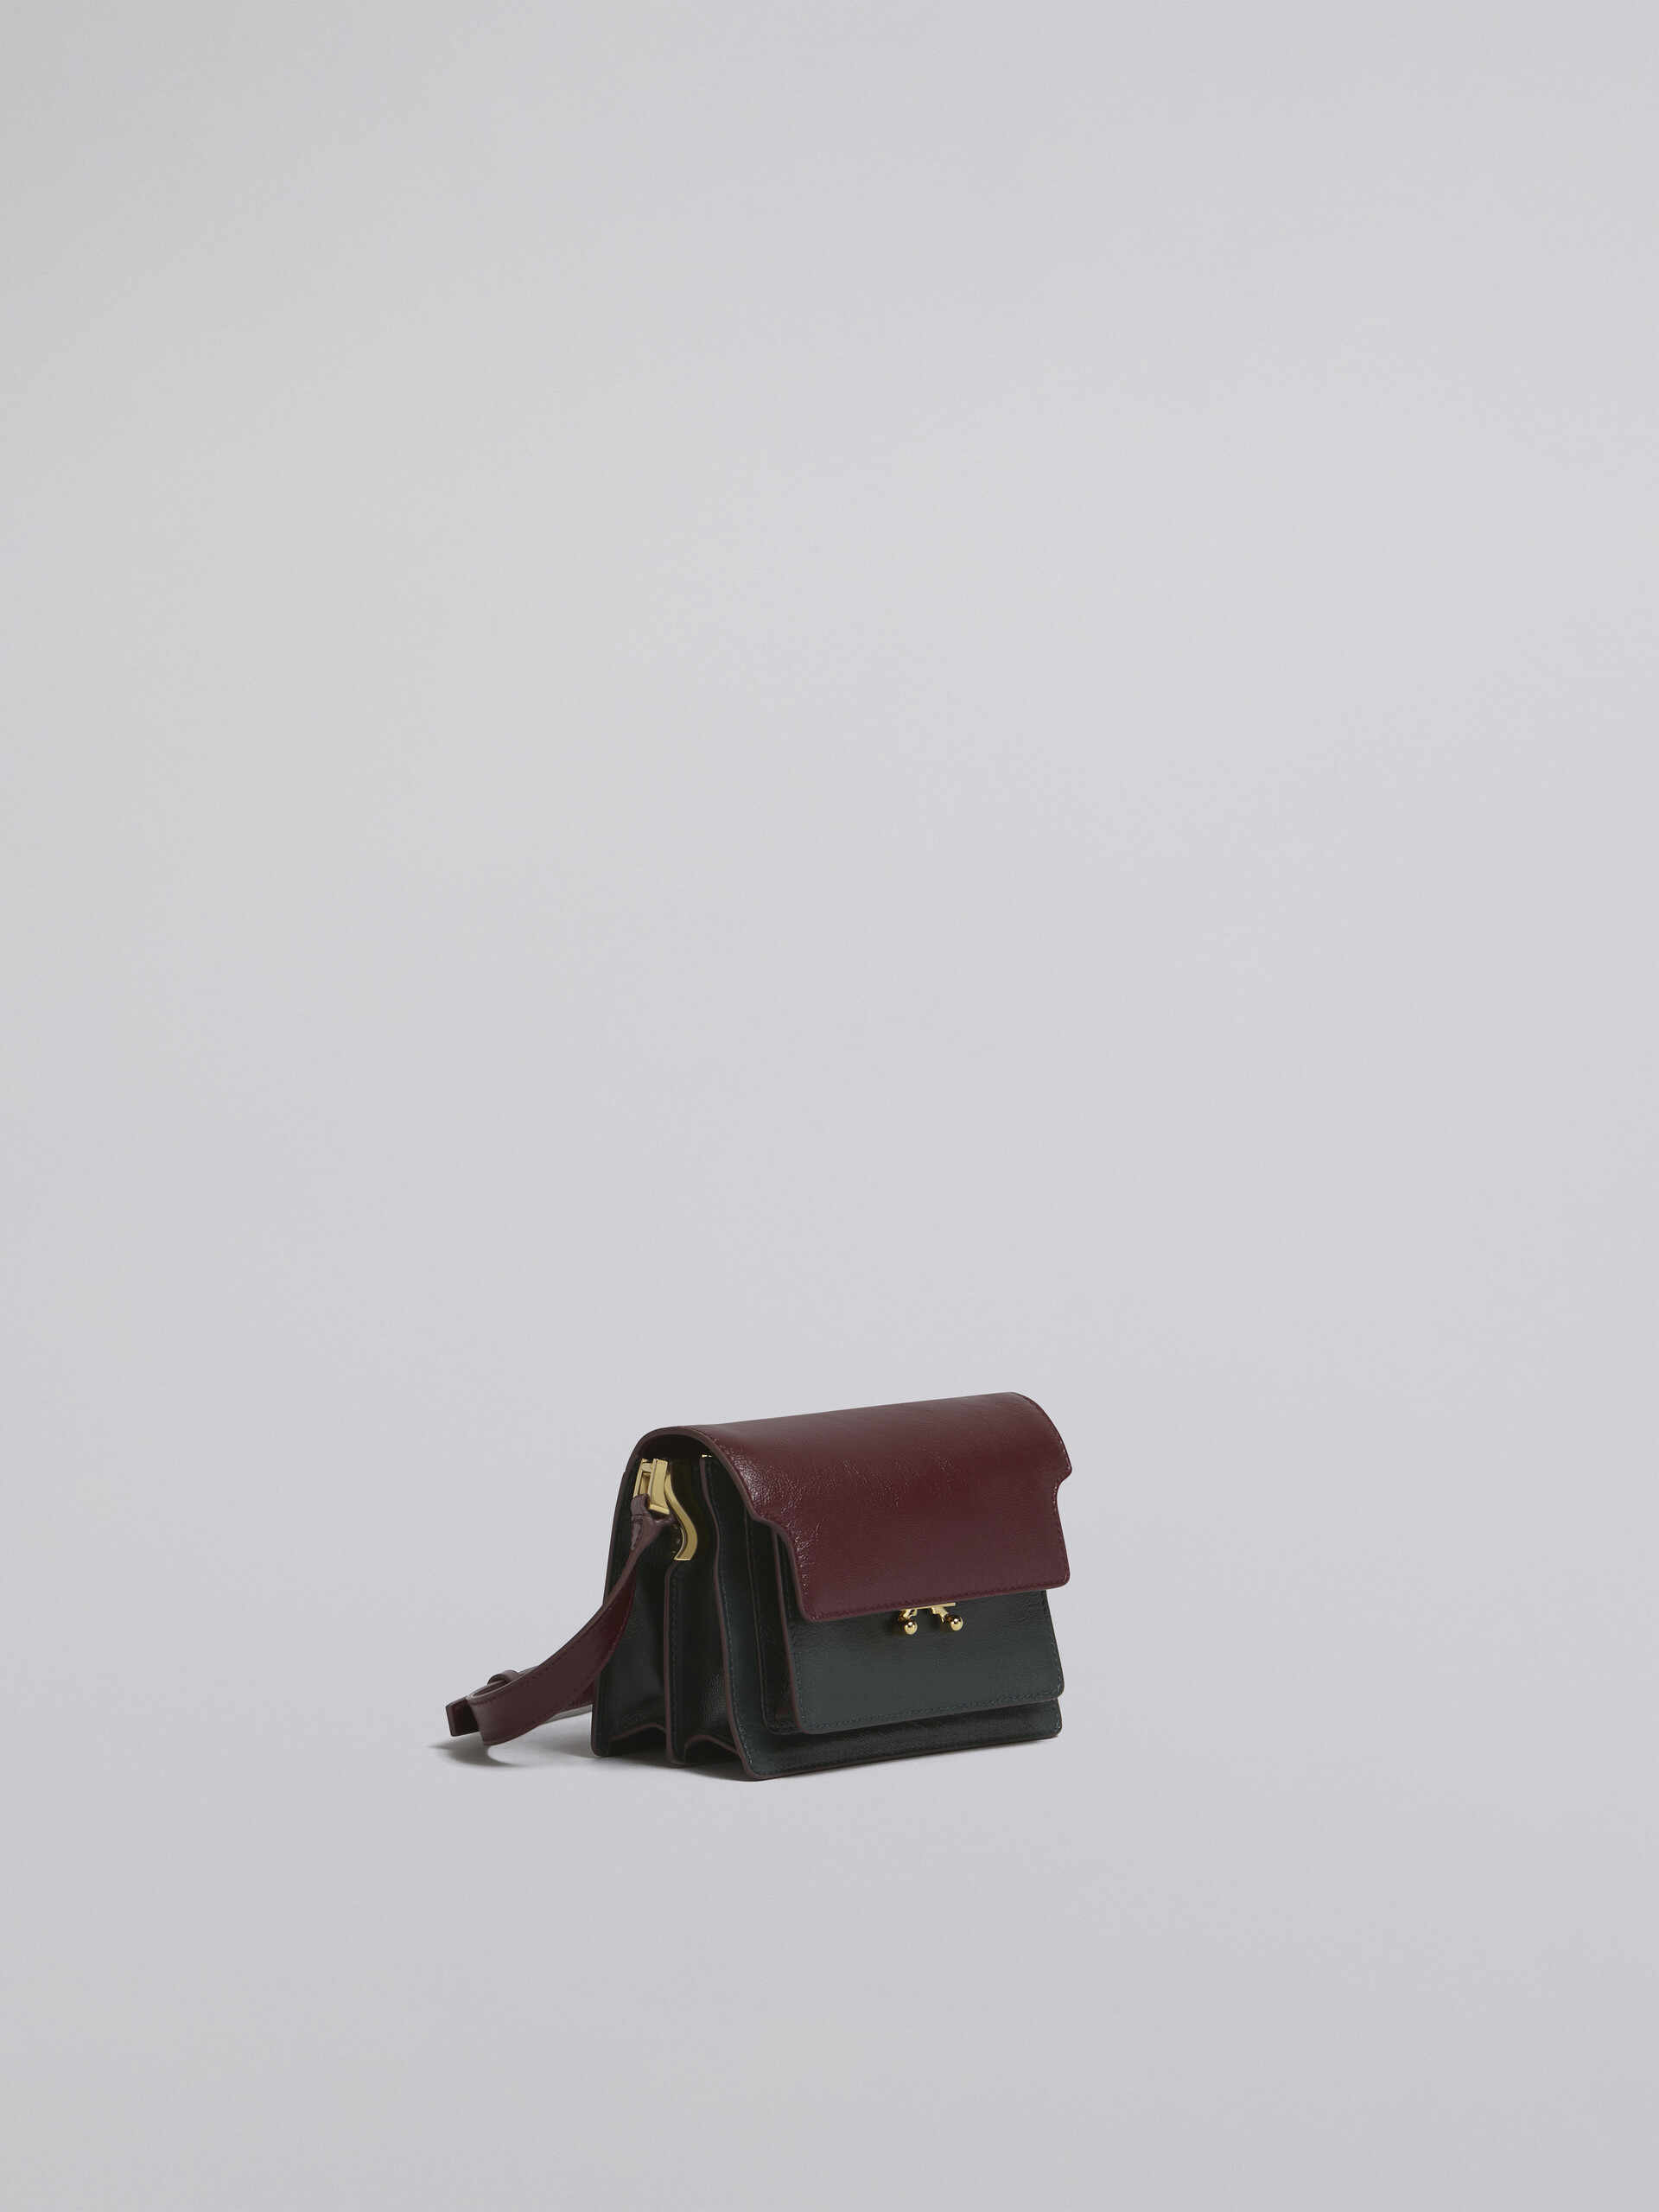 TRUNK SOFT bag mini in pelle verde e bordeaux - Borse a spalla - Image 5